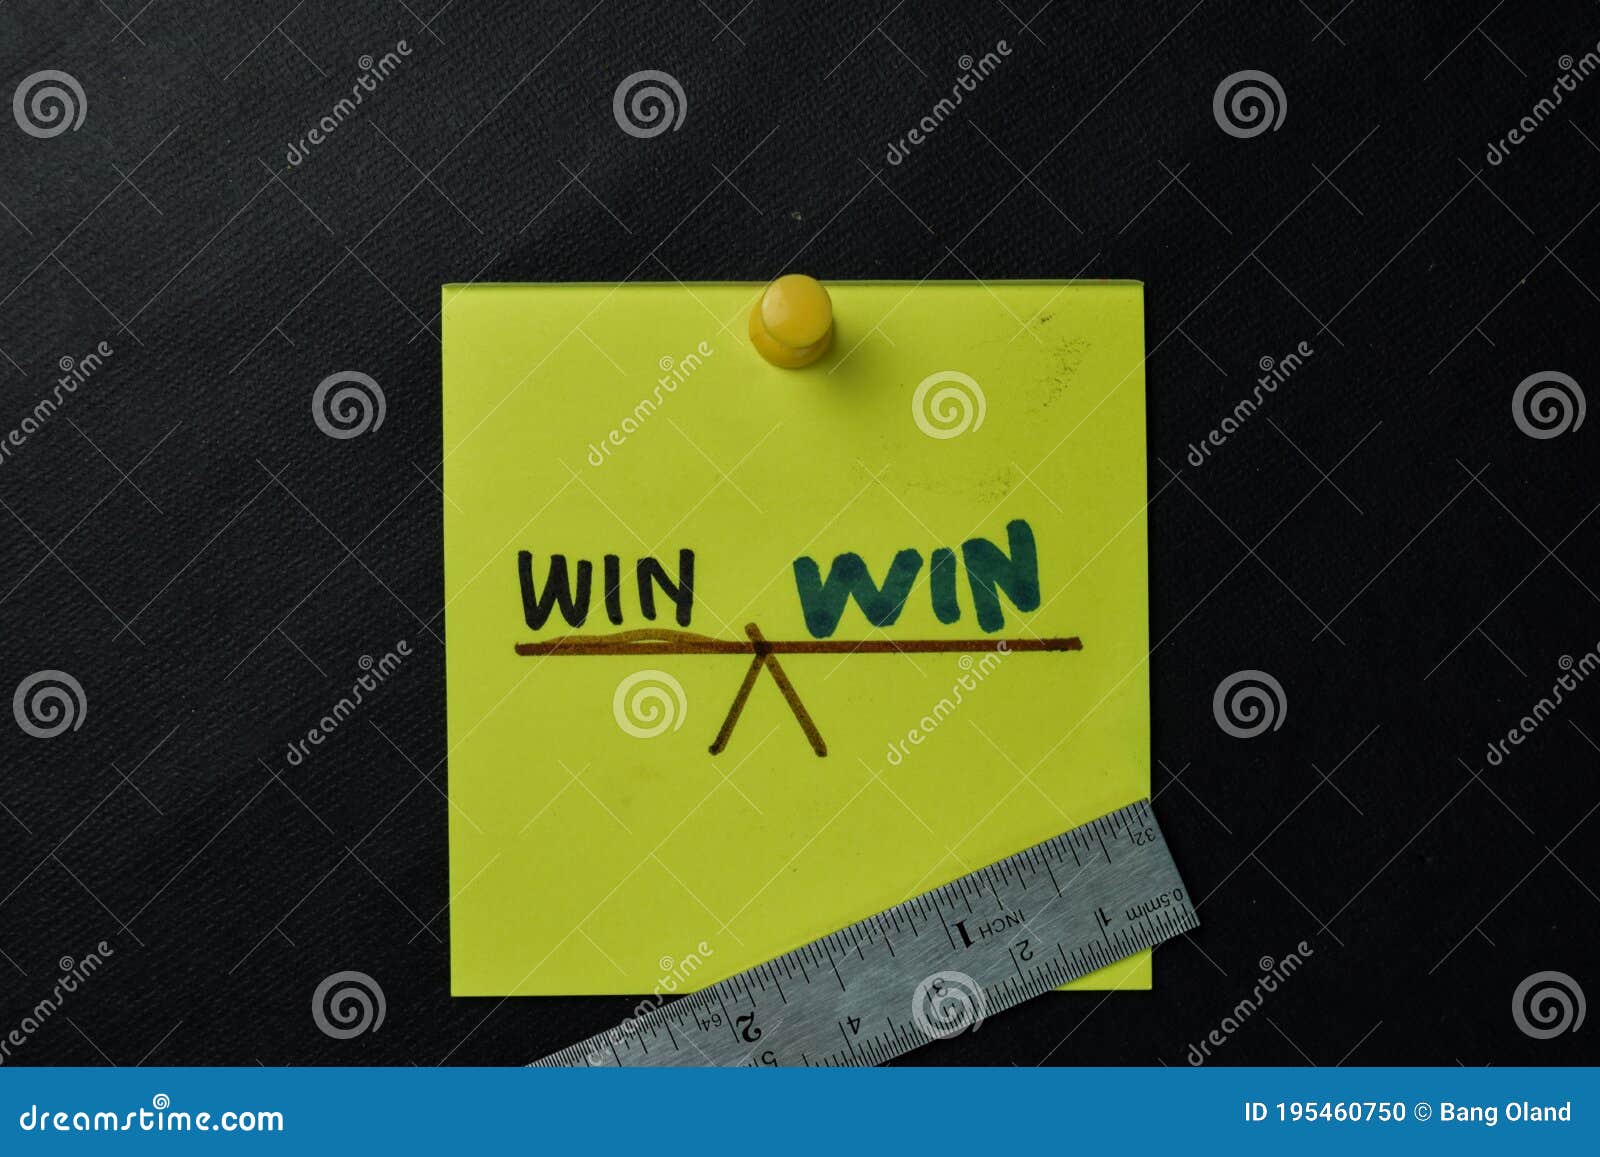 win win write on sticky notes  on office desk